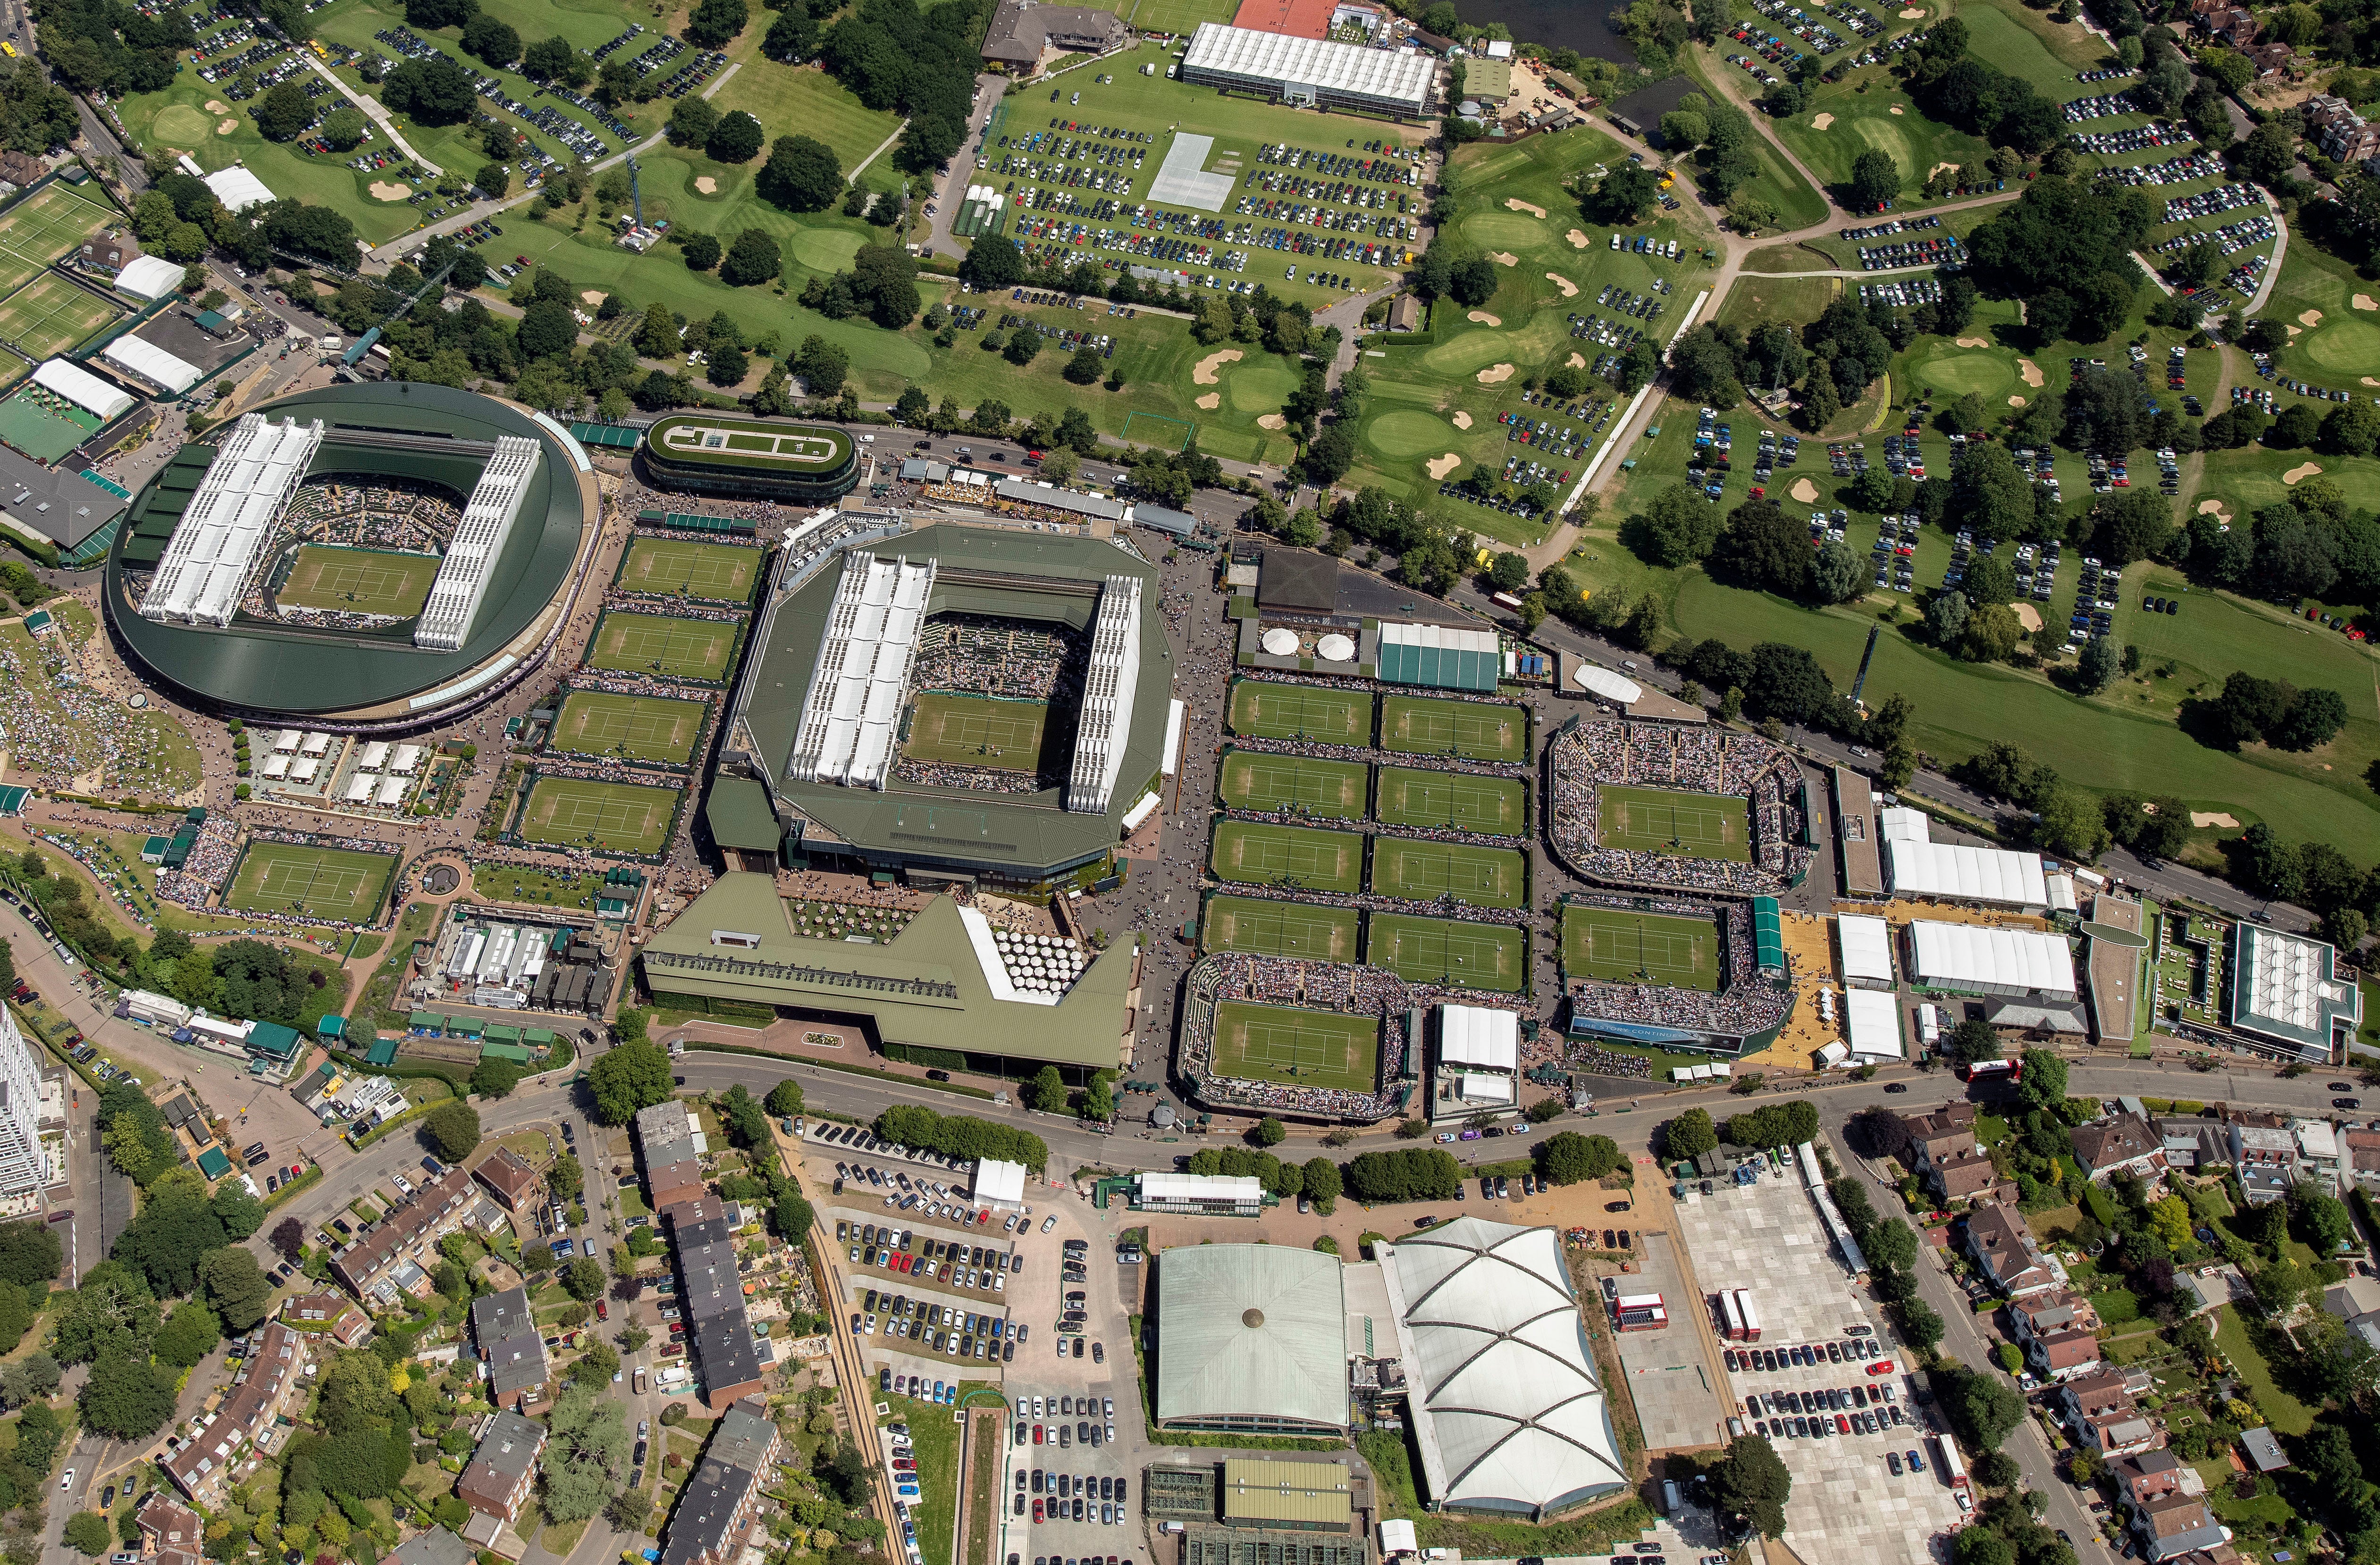 wimbledon, london, tennis, planning, inside the years-long contentious planning row at wimbledon